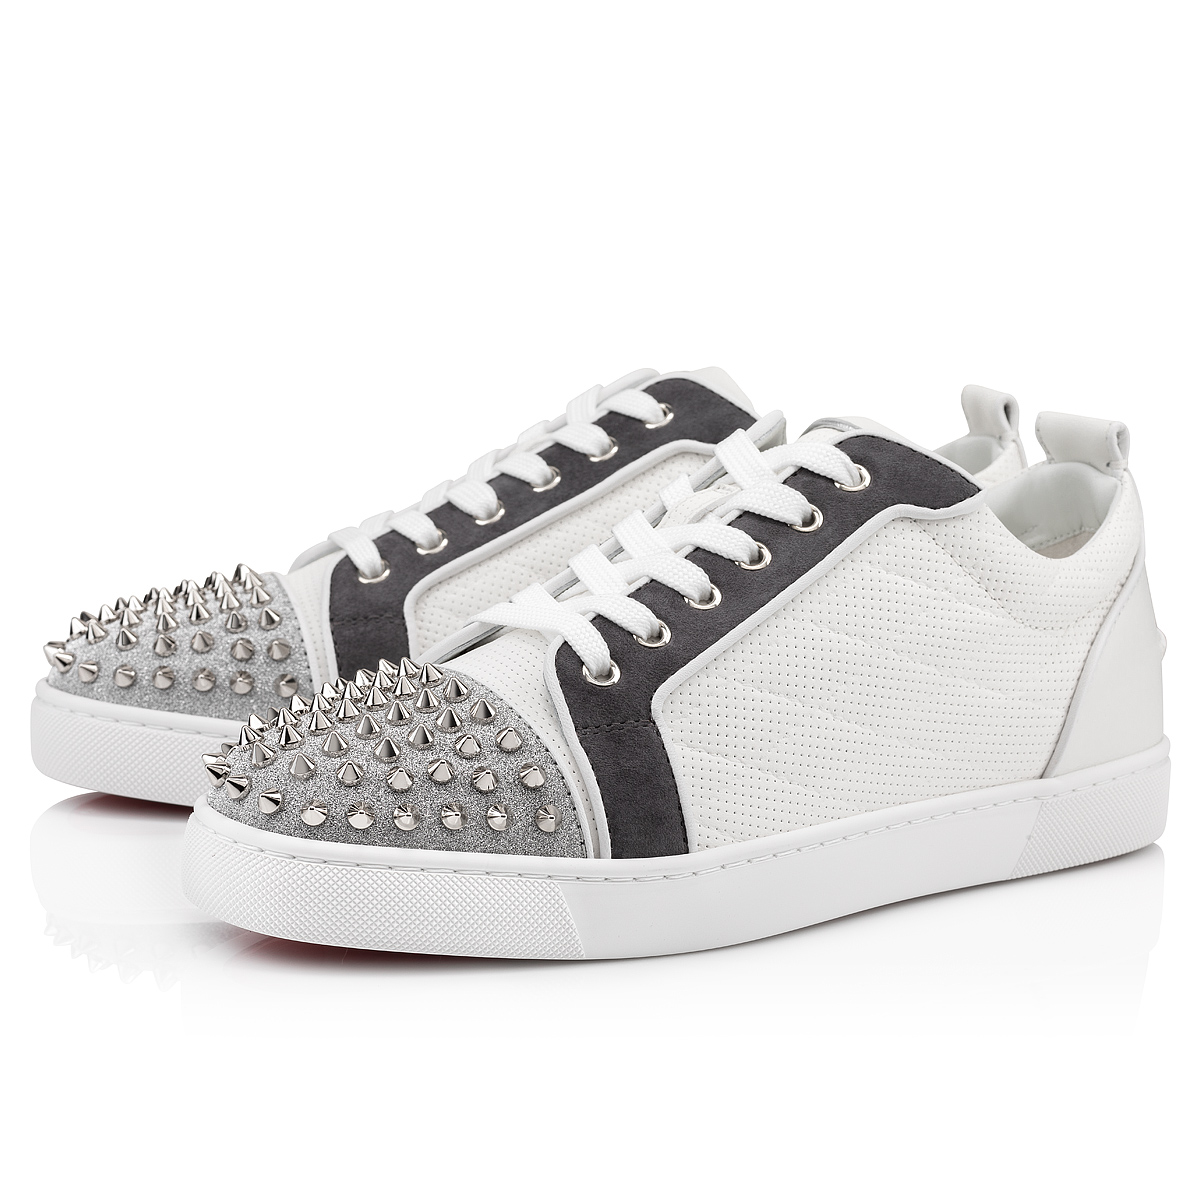 Christian Louboutin Men's Louis Junior Spikes Sneakers - Multi White - Size 14